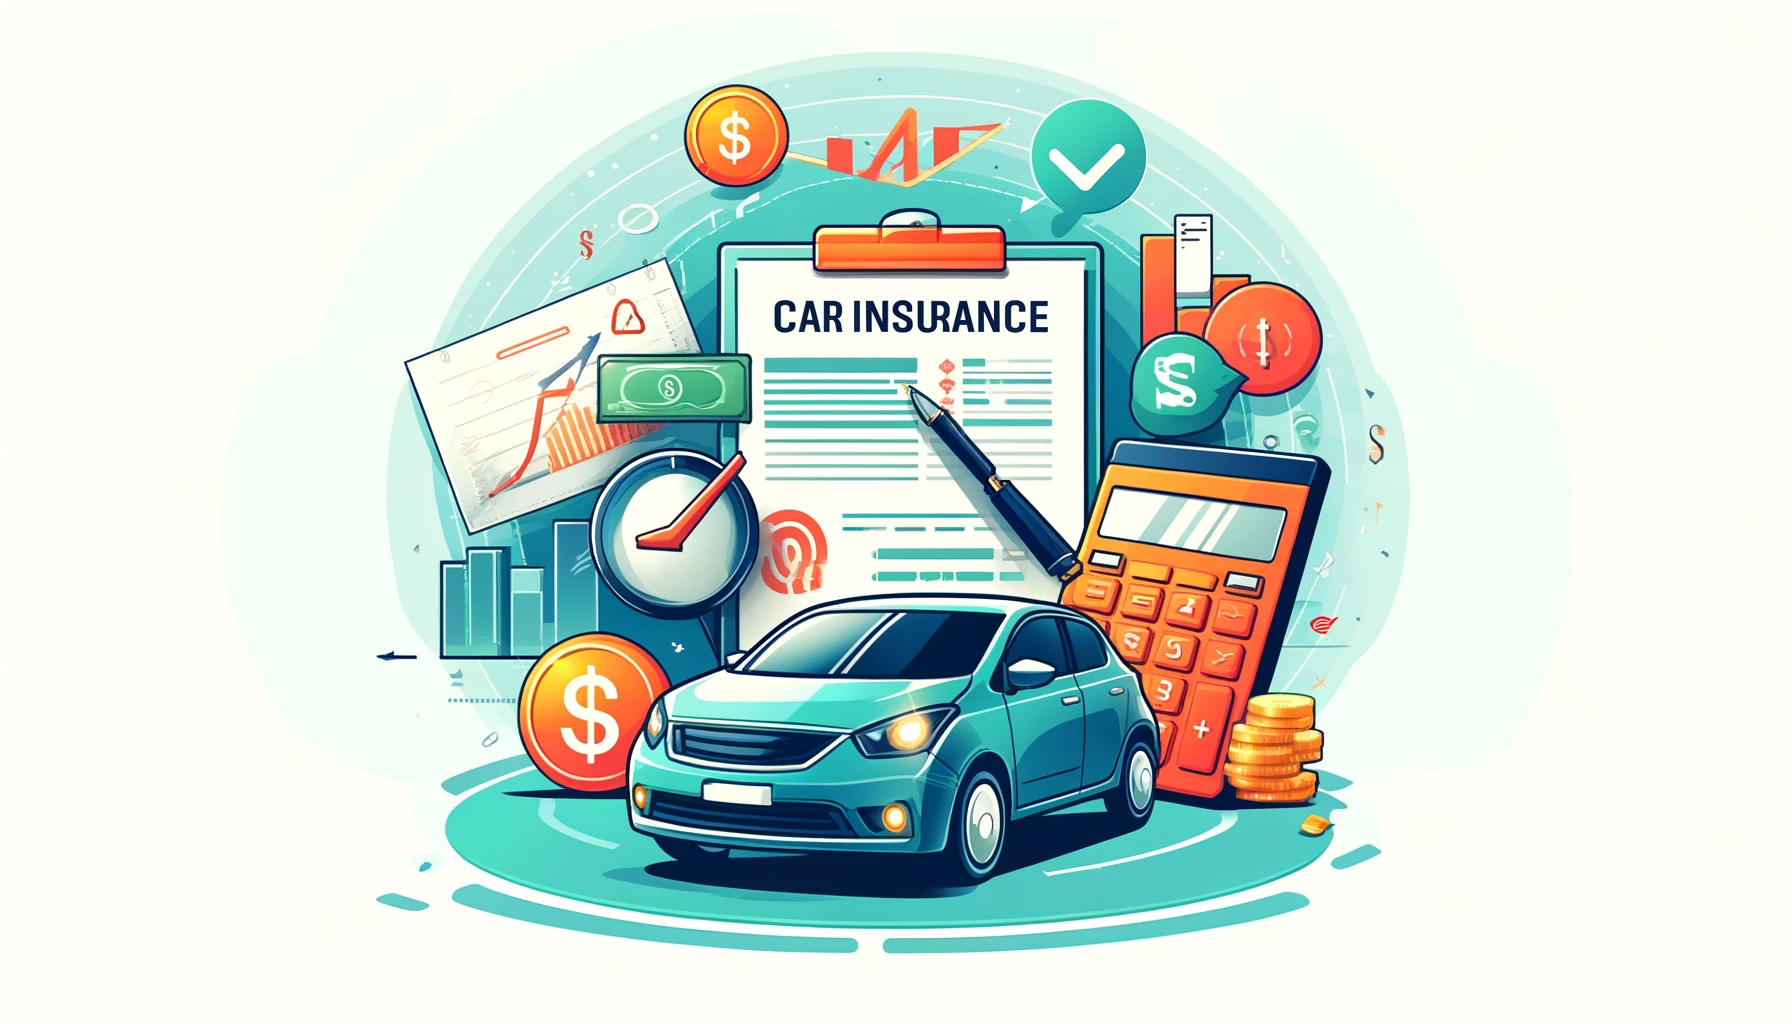 Car Insurance Rates